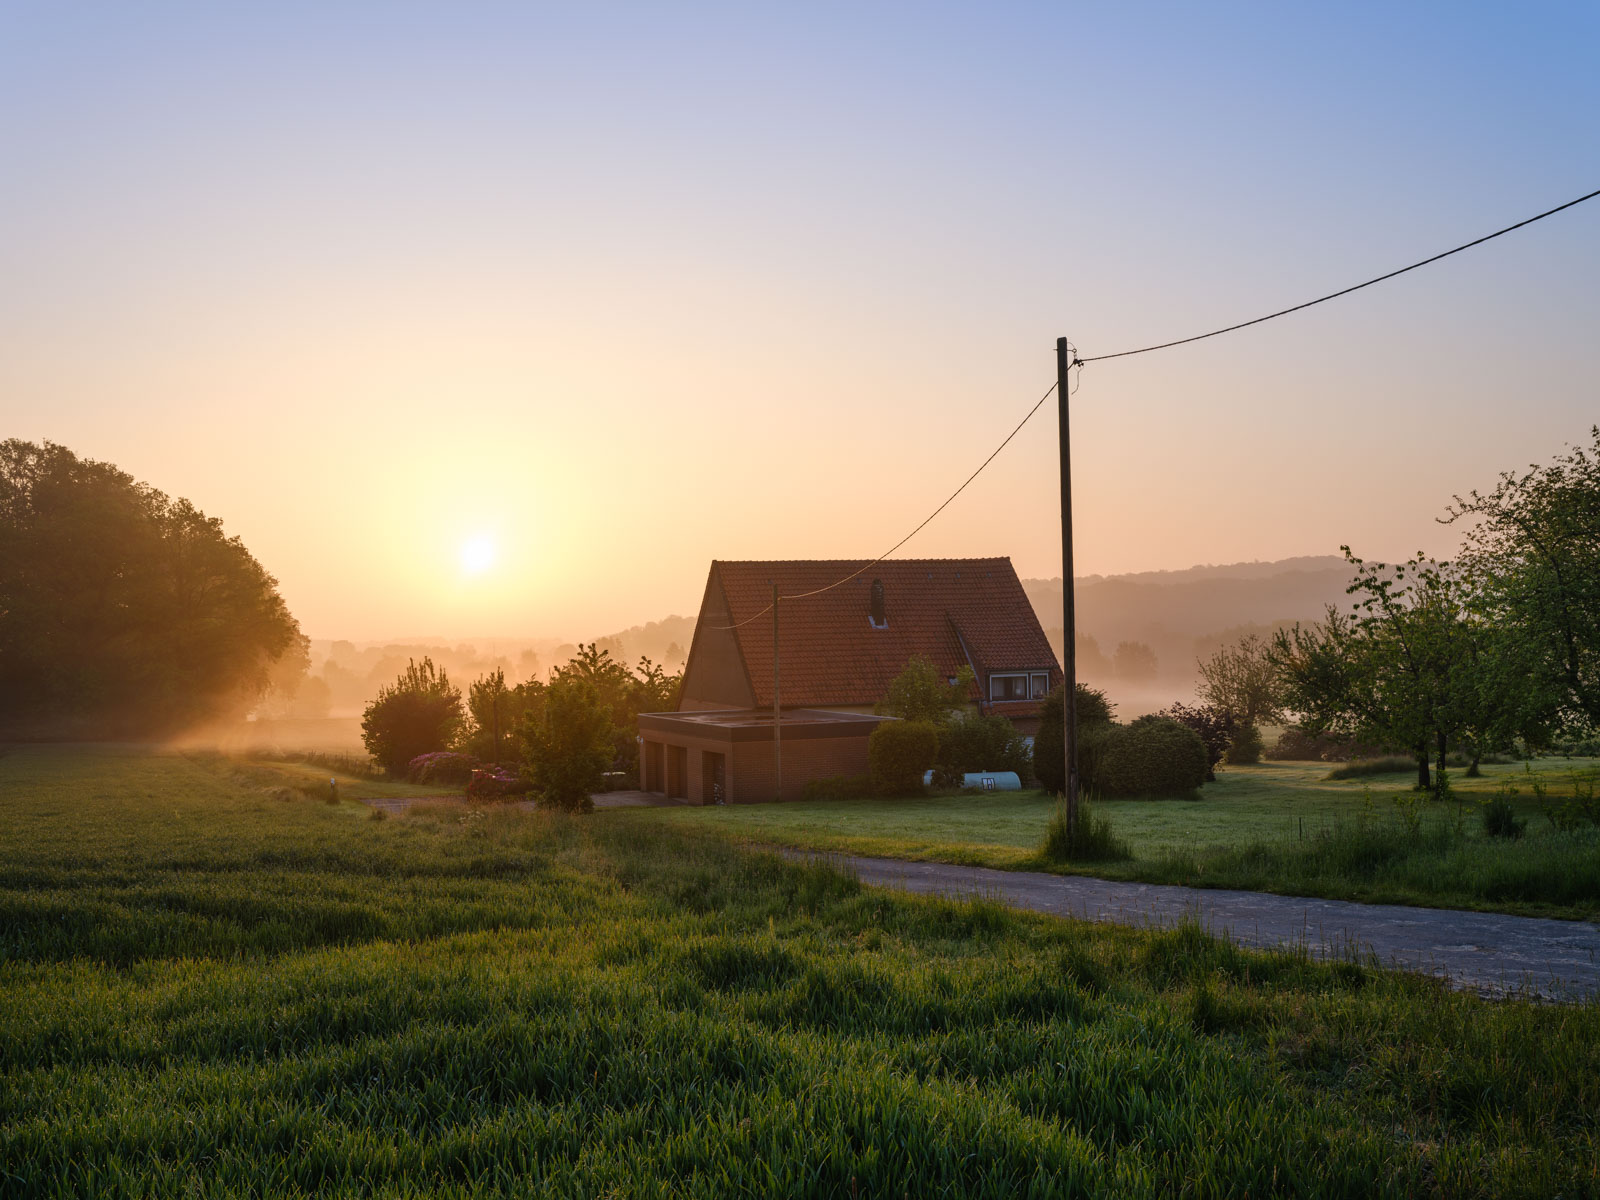 House in the fields at sunrise in May 2021 (Bielefeld-Dornberg, Germany).